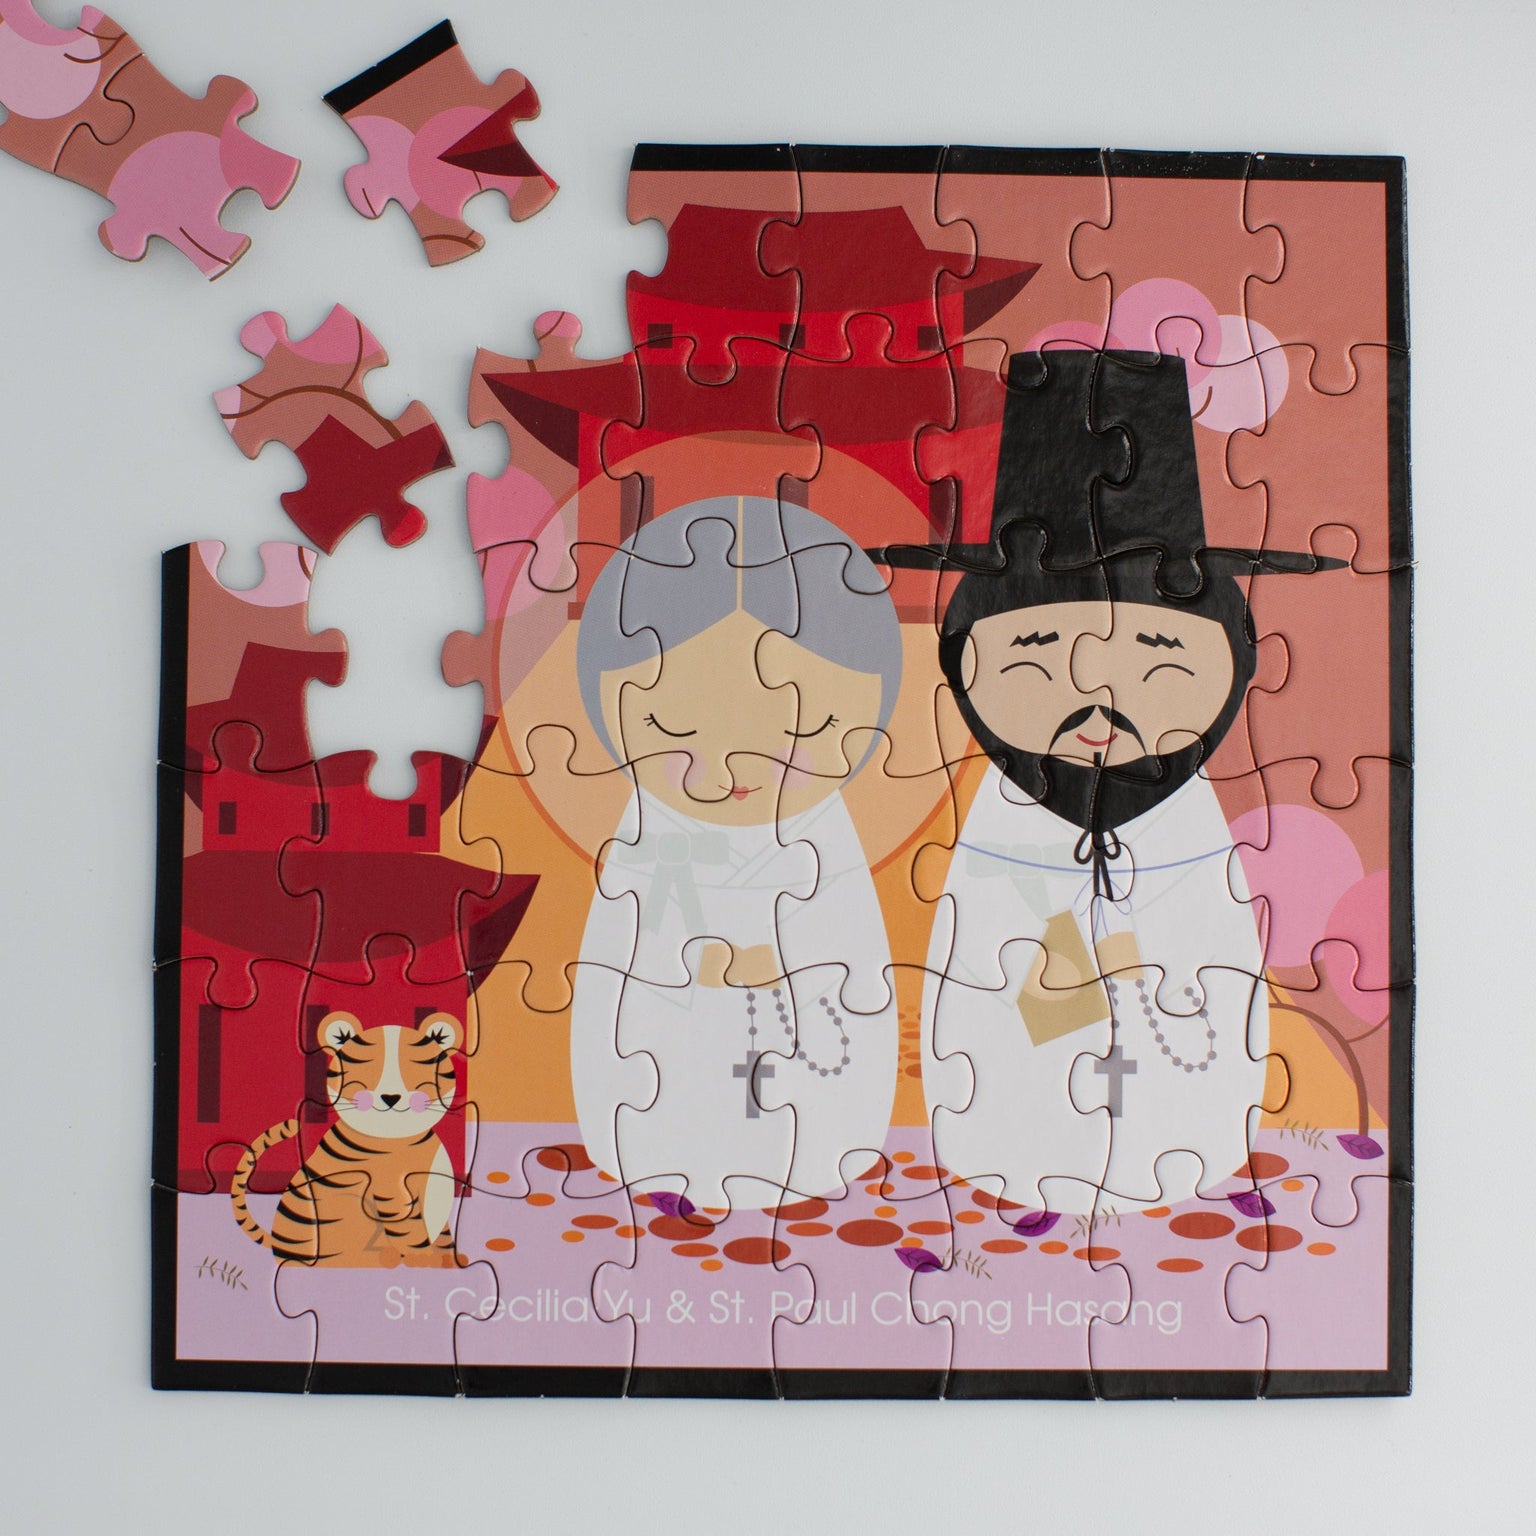 St. Cecilia Yu and St. Paul Chong Hasang Mini Puzzle